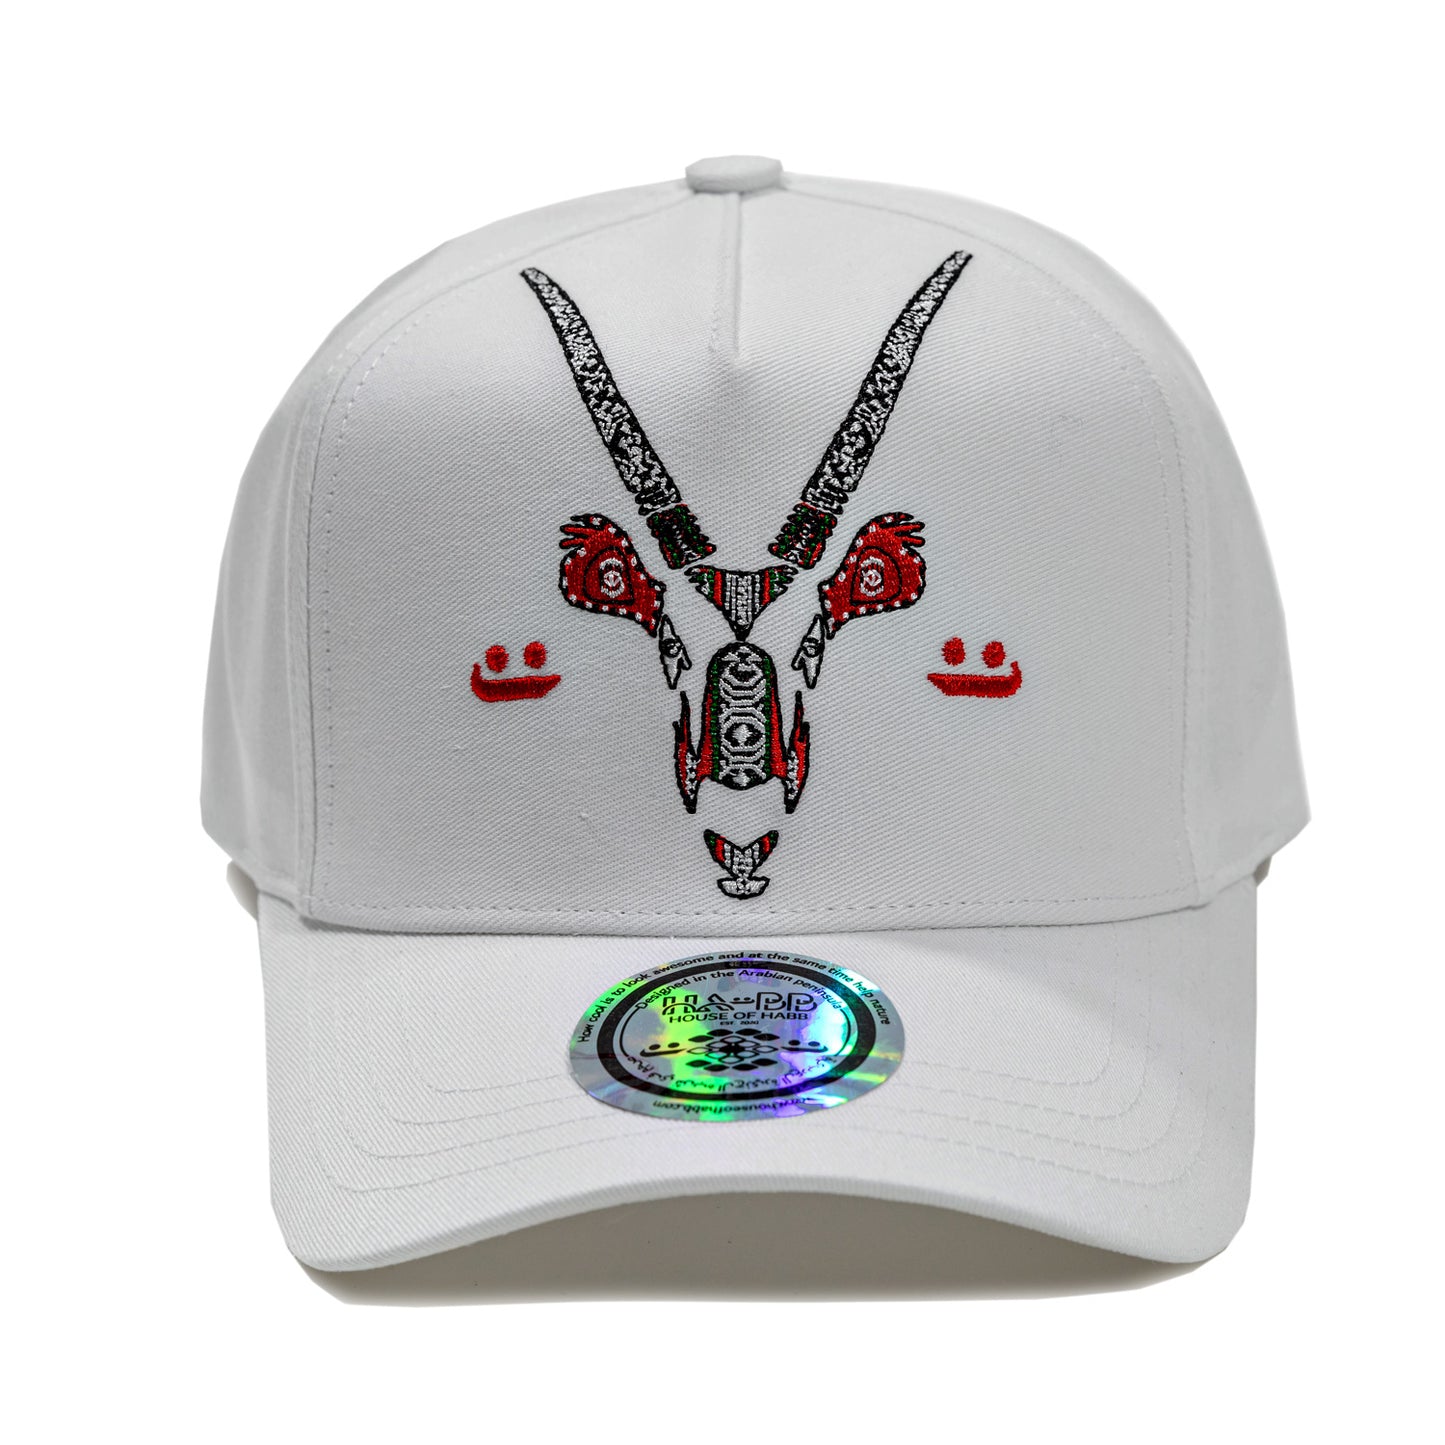 White baseball cap with Oryx embroidery al sadu HABB trucker cap